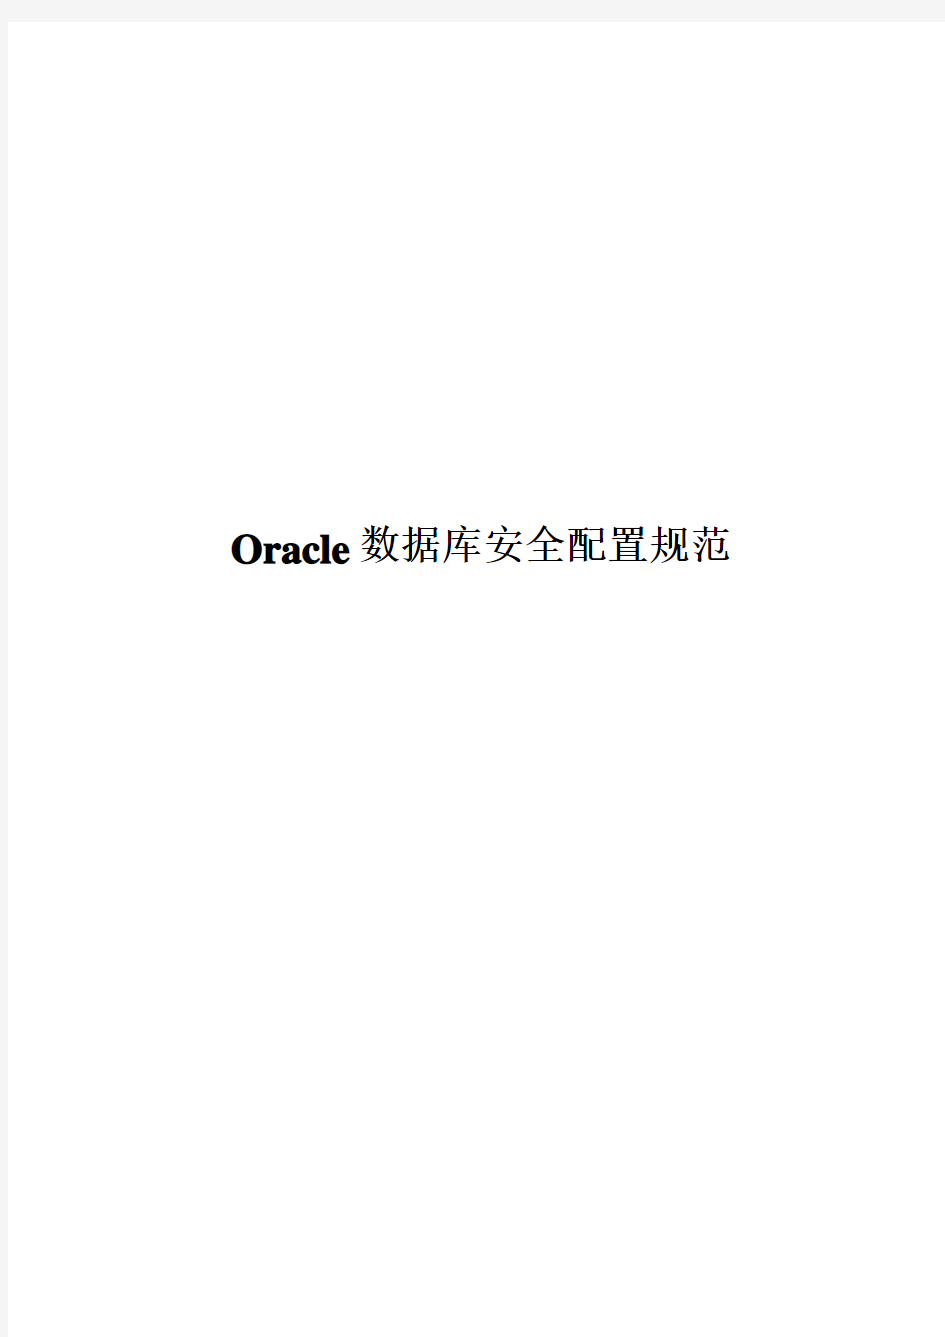 Oracle数据库安全配置规范